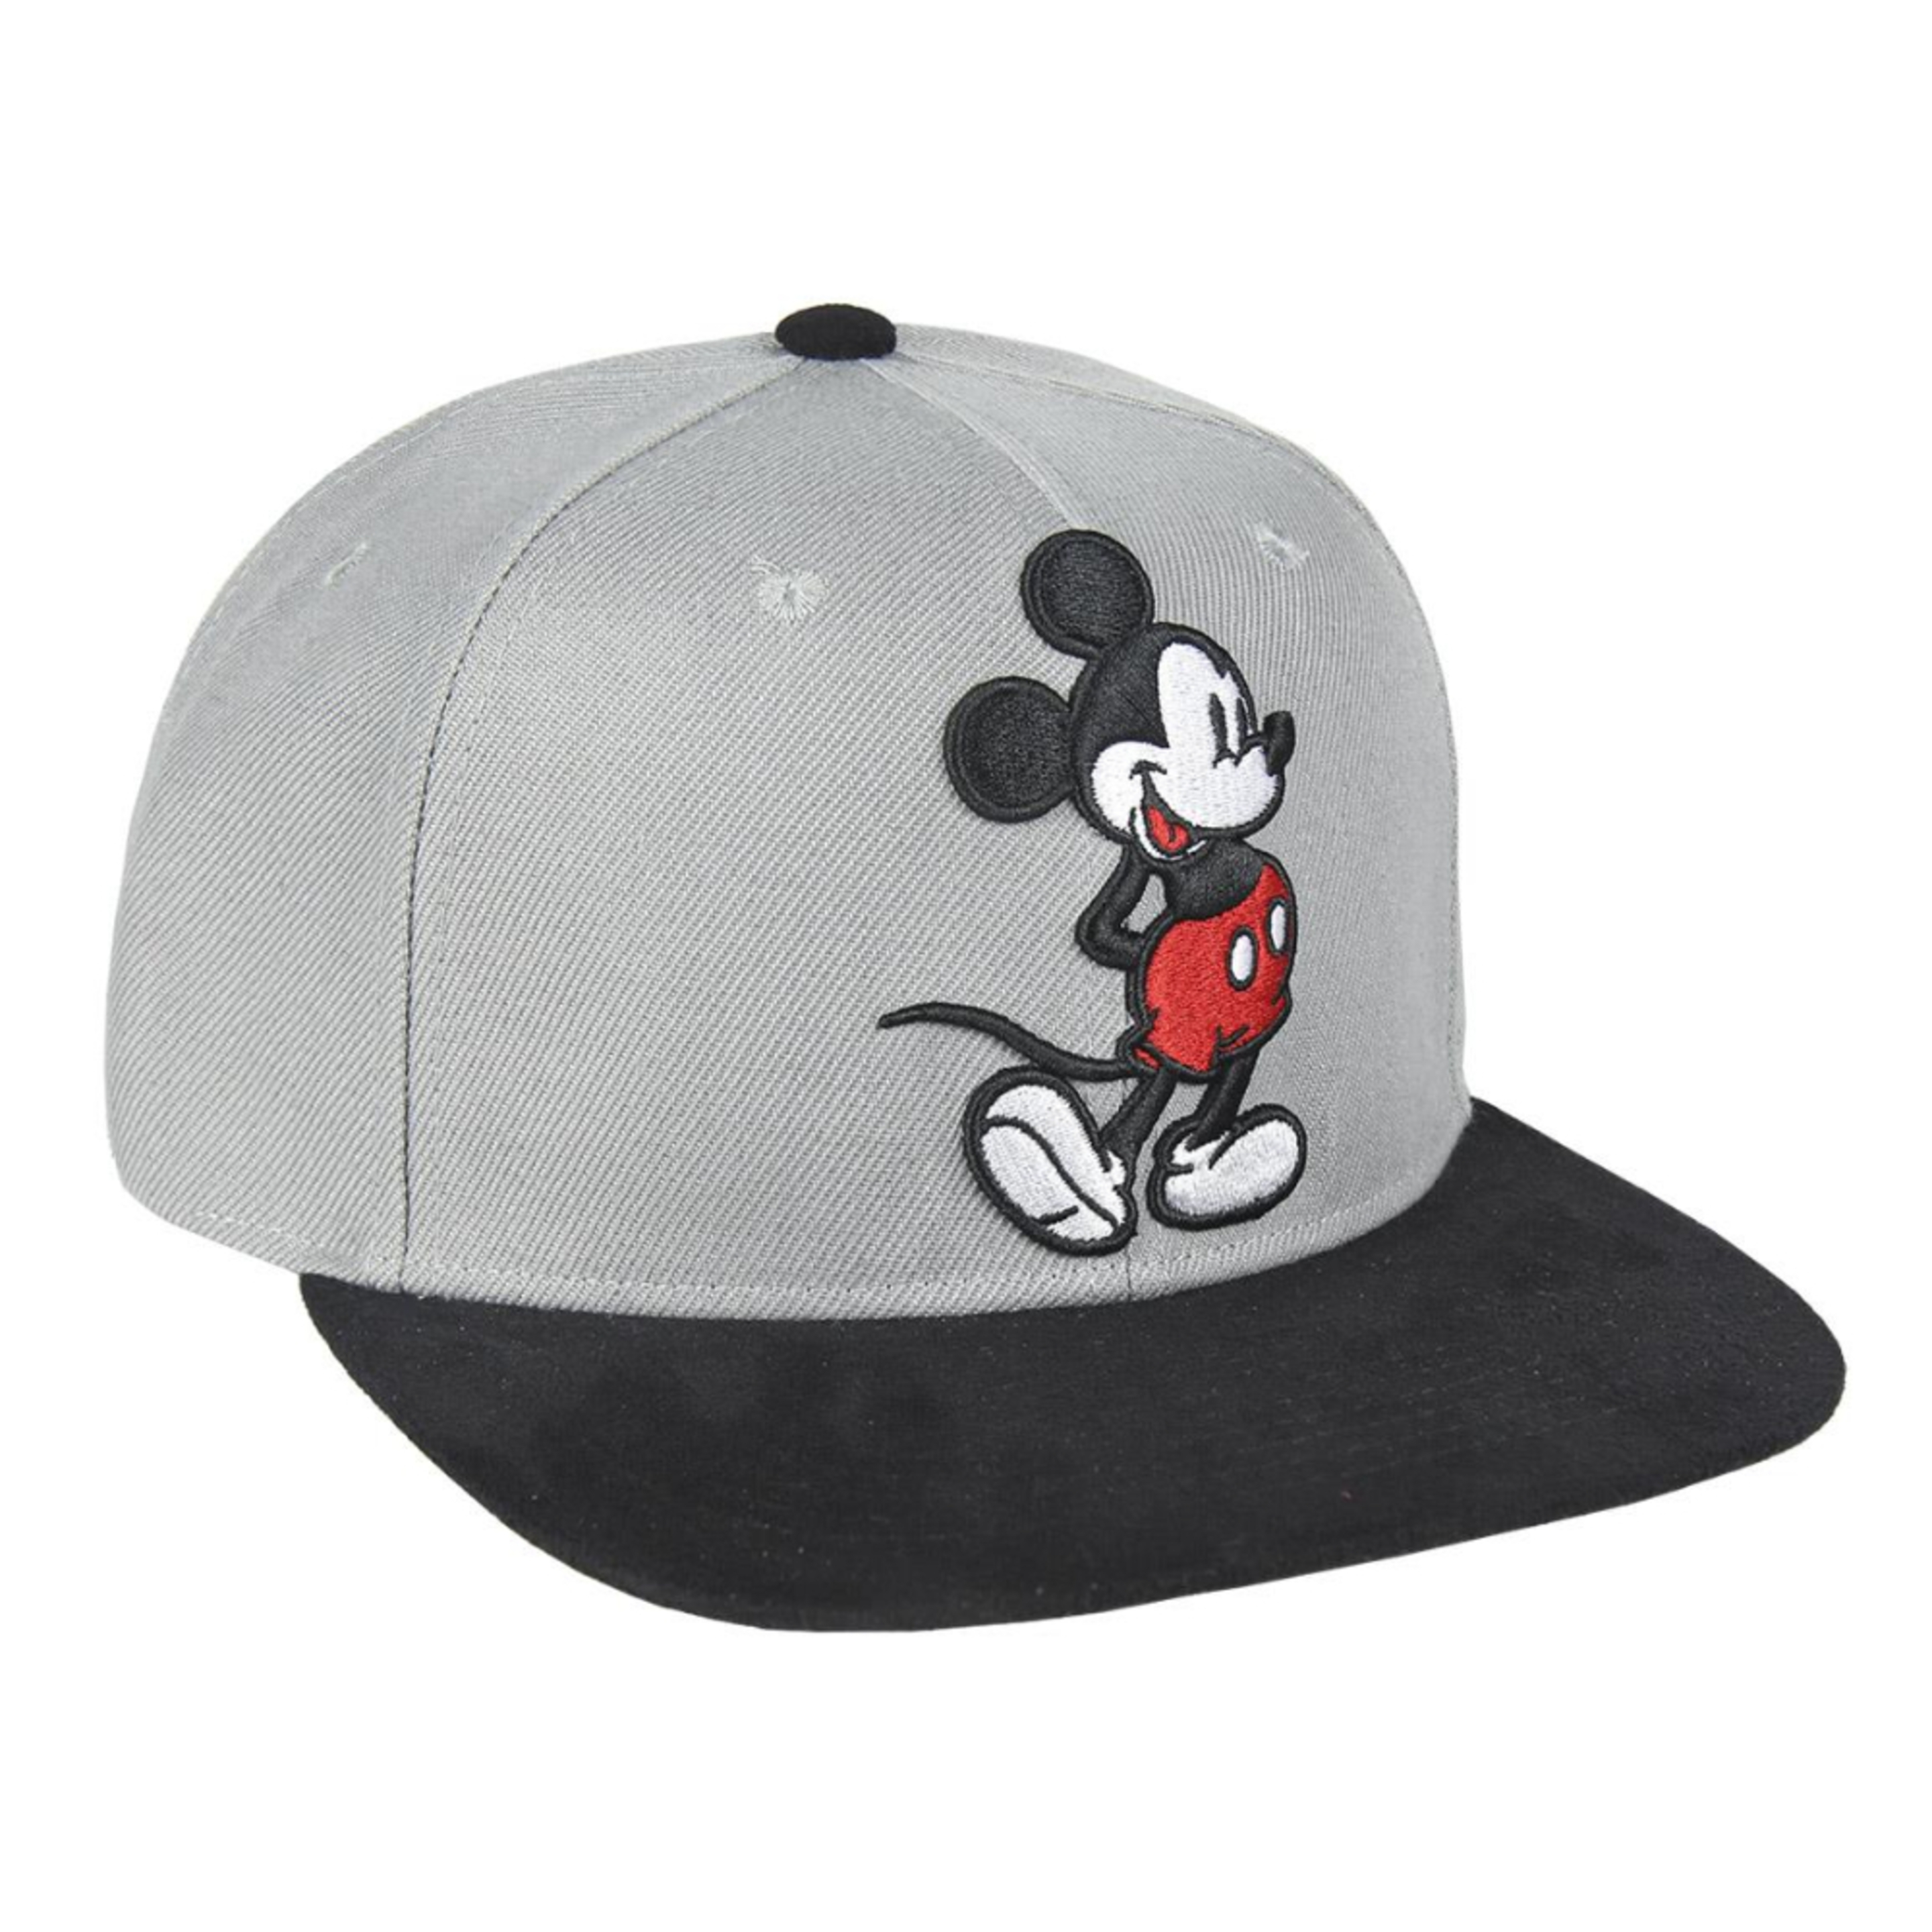 Gorra Mickey Mouse 64561 - gris - 